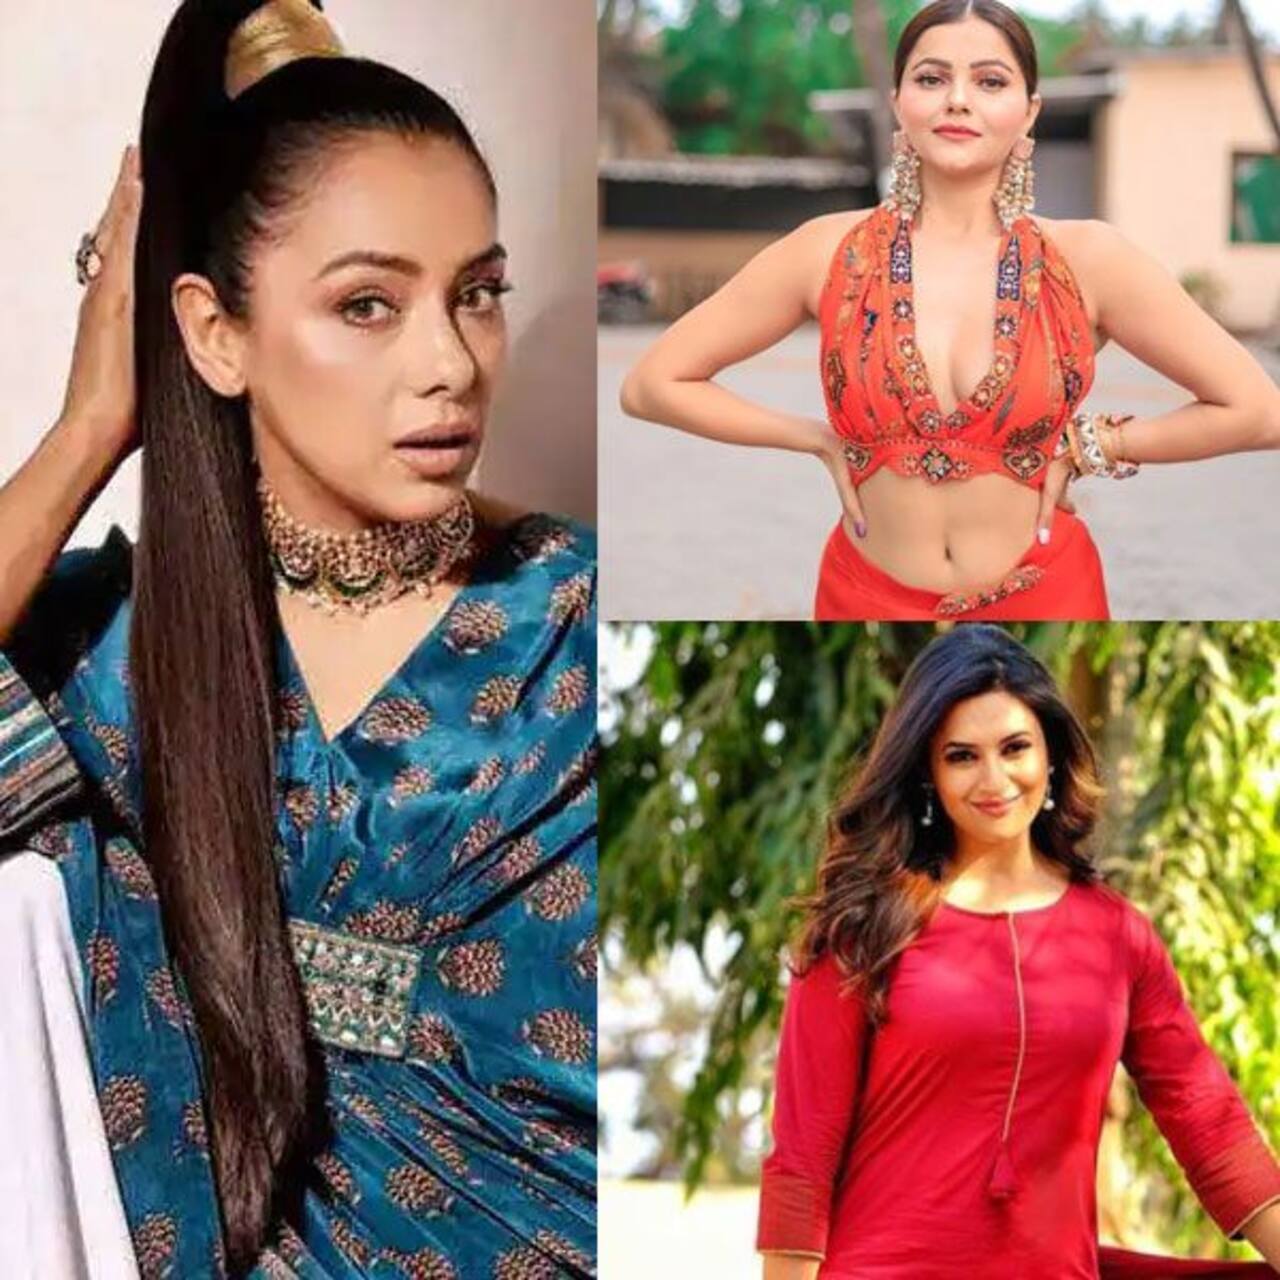 Anupamaa star Rupali Ganguly, Rubina Dilaik, Divyanka Tripathi Dahiya and more TV actresses who earn more than their husbands